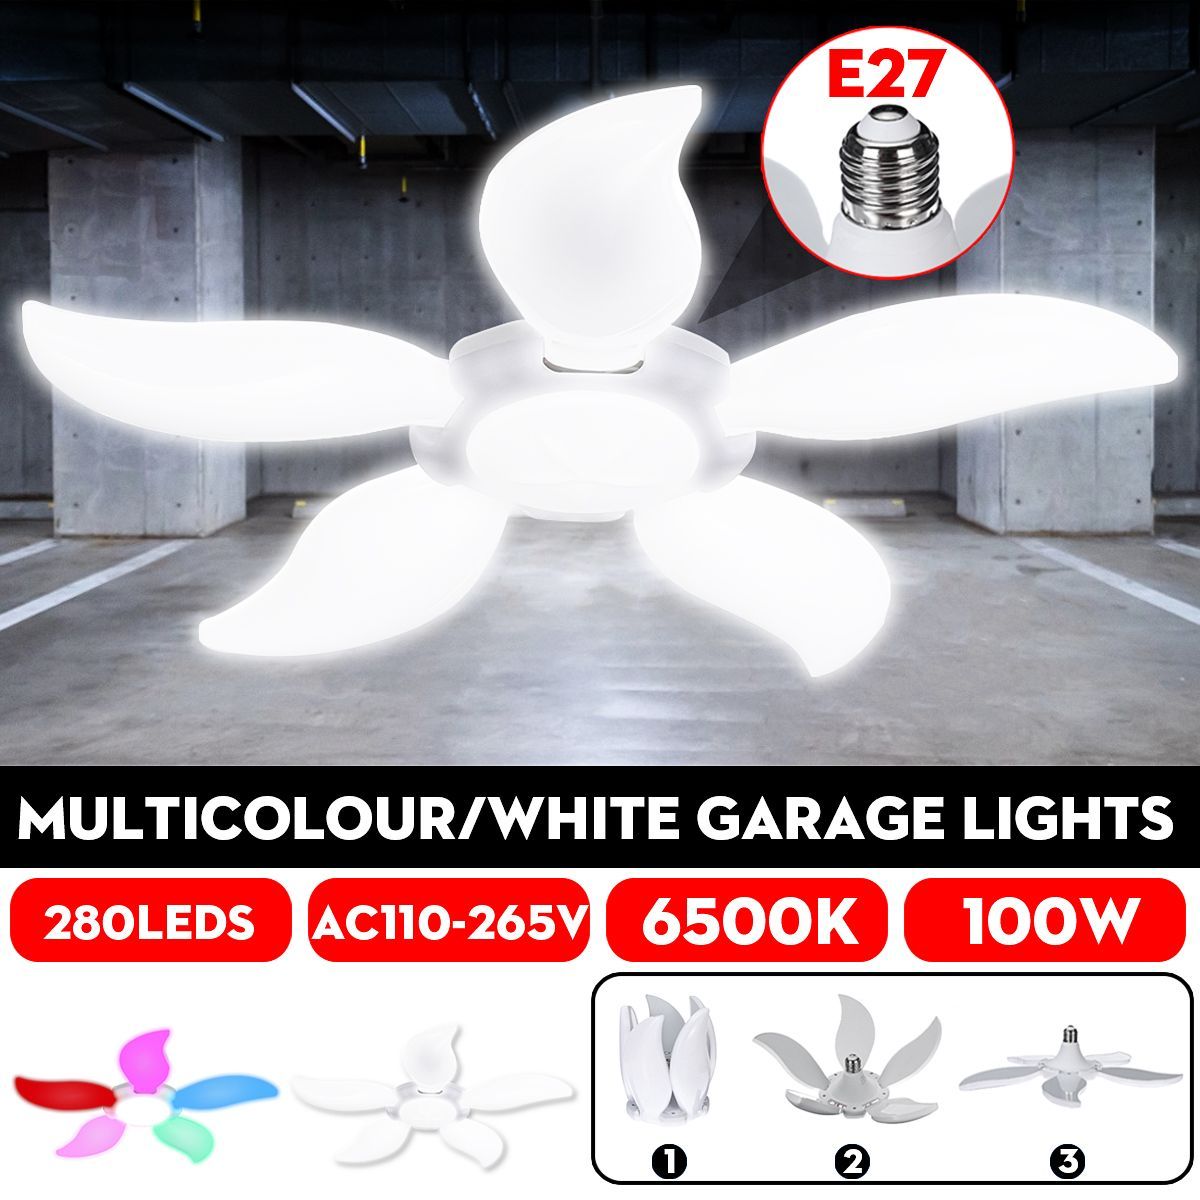 100W-E27-Colorful-Cool-White-280LED-Garage-Light-Bulb-Deformable-Ceiling-Workshop-Lamp-for-Parking-B-1621887